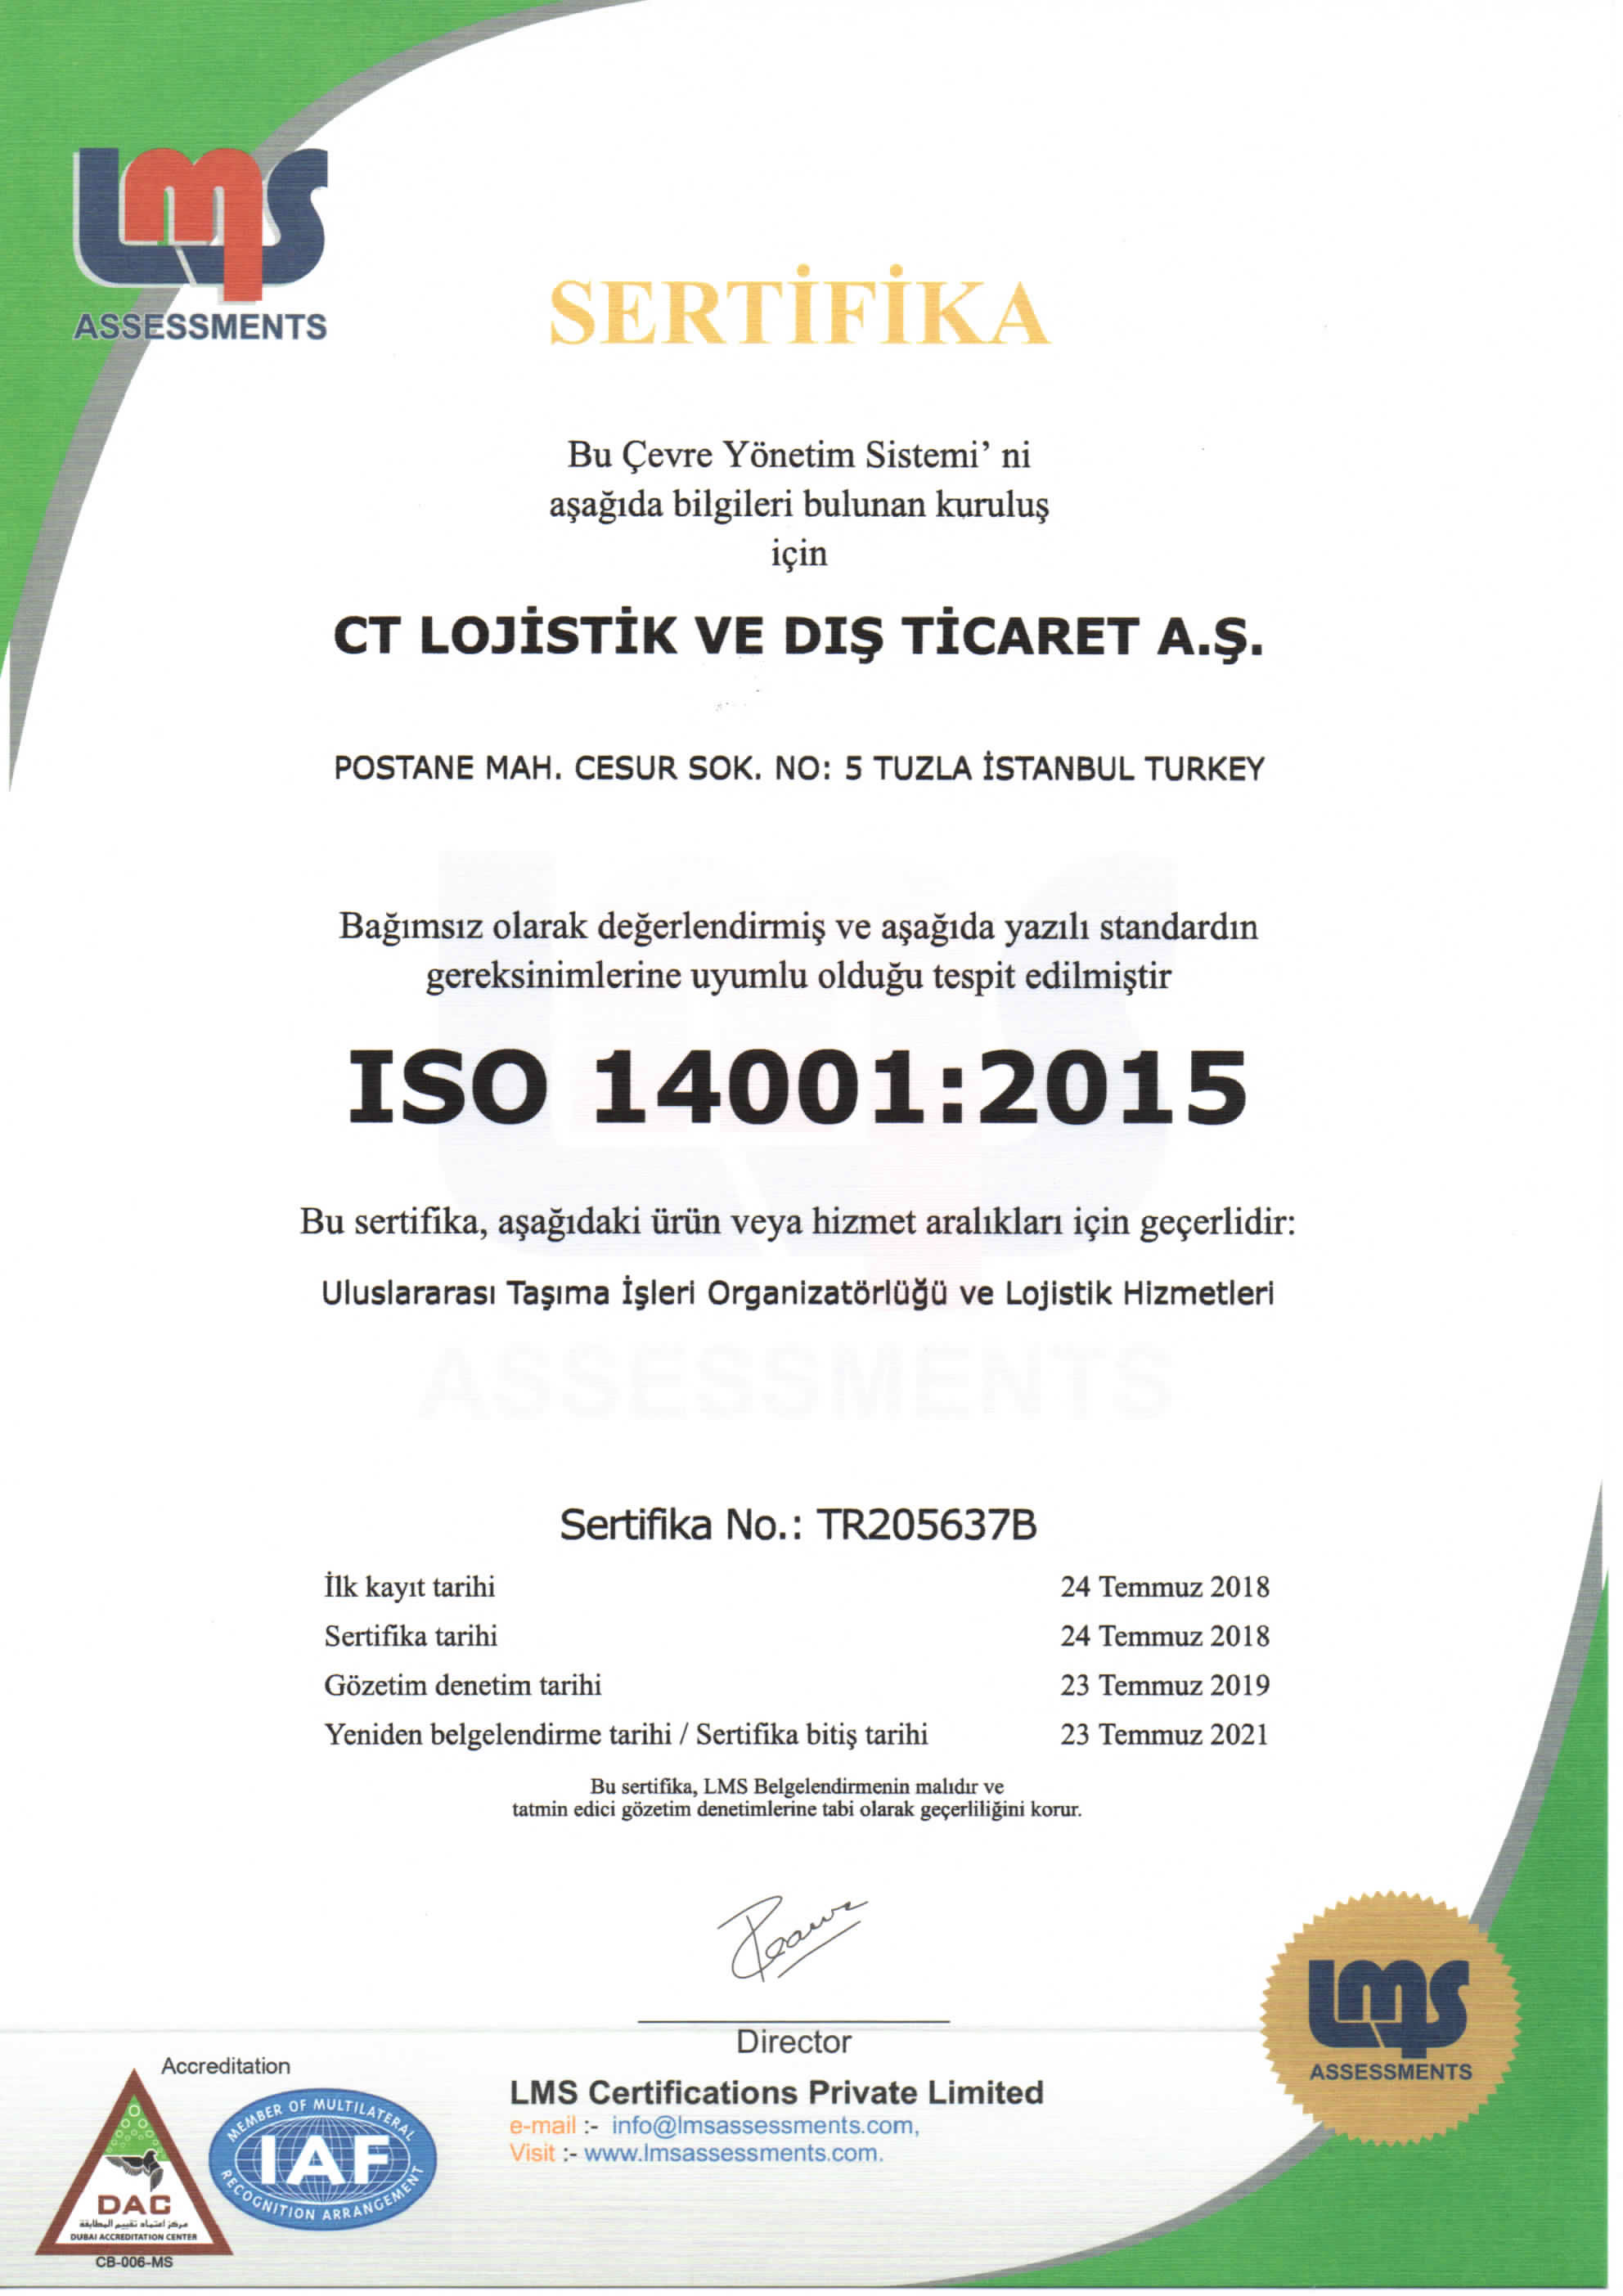 CT Lojistik ve Dış Ticaret A.Ş ISO 14001